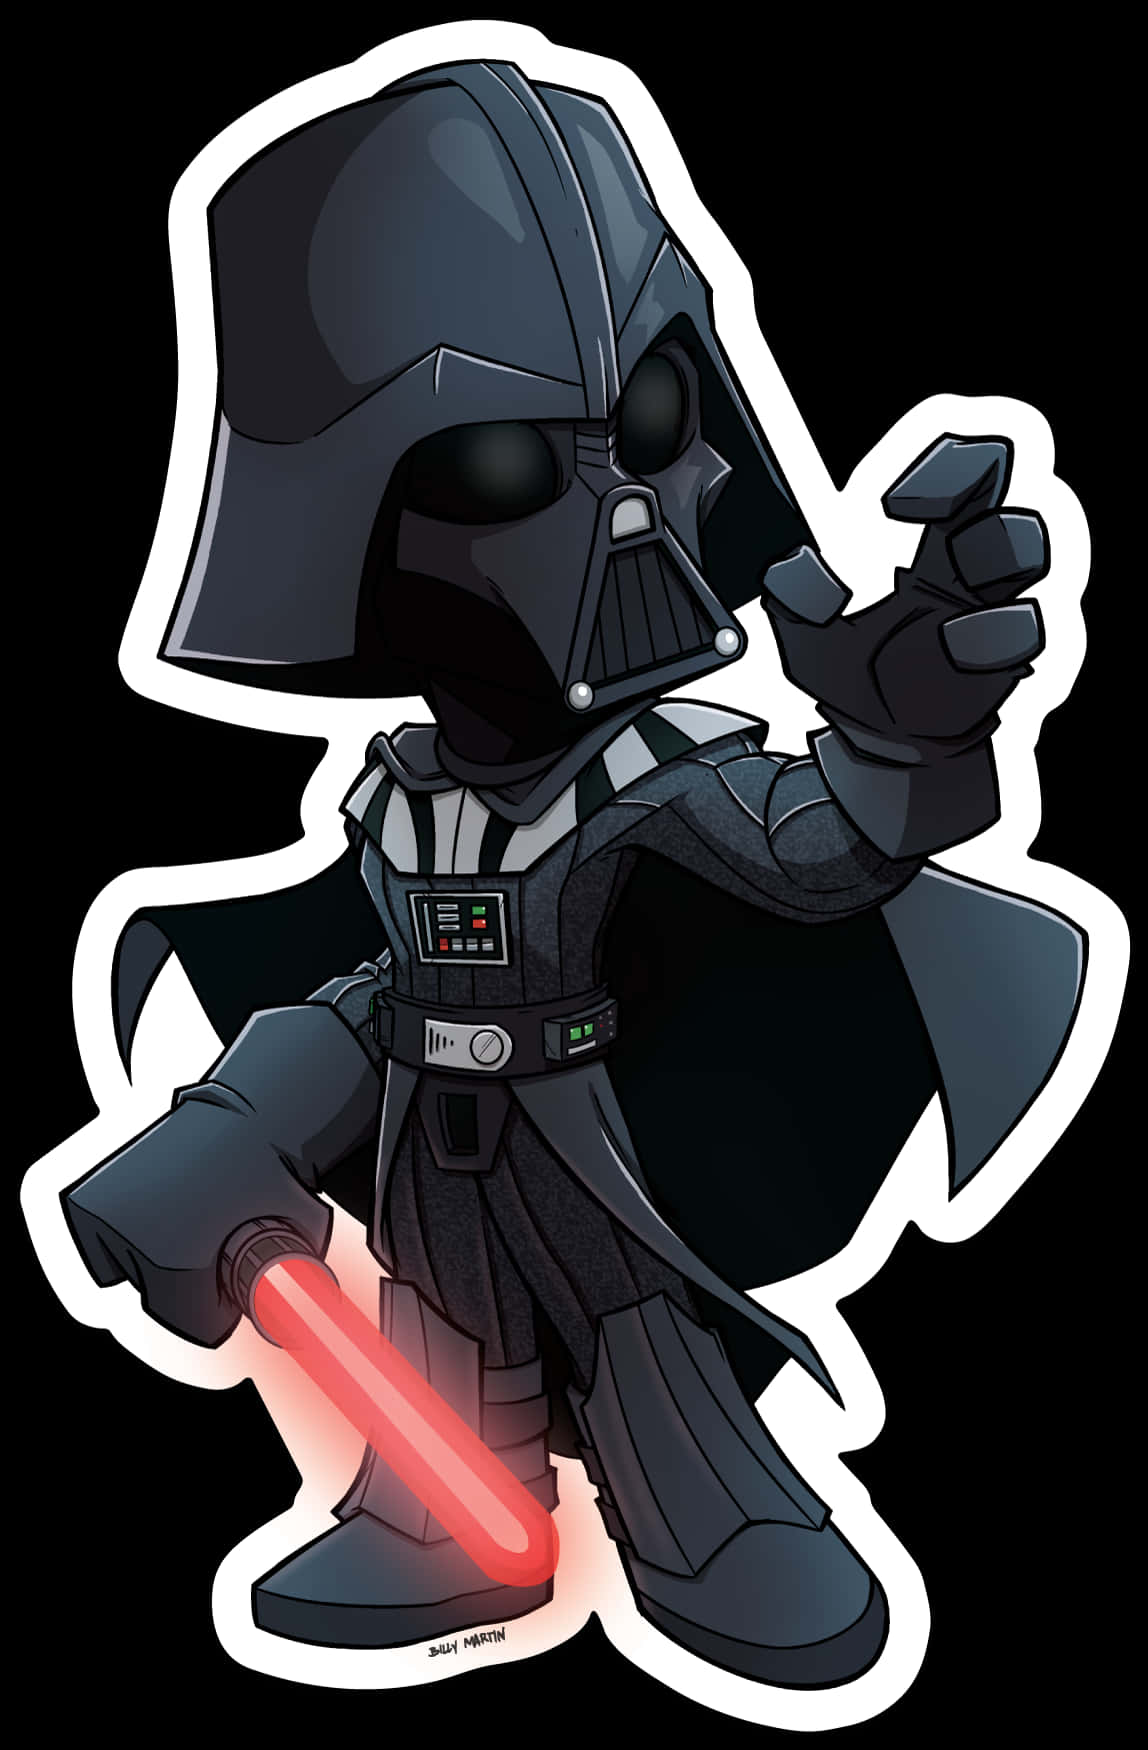 Chibi Darth Vader Illustration PNG image